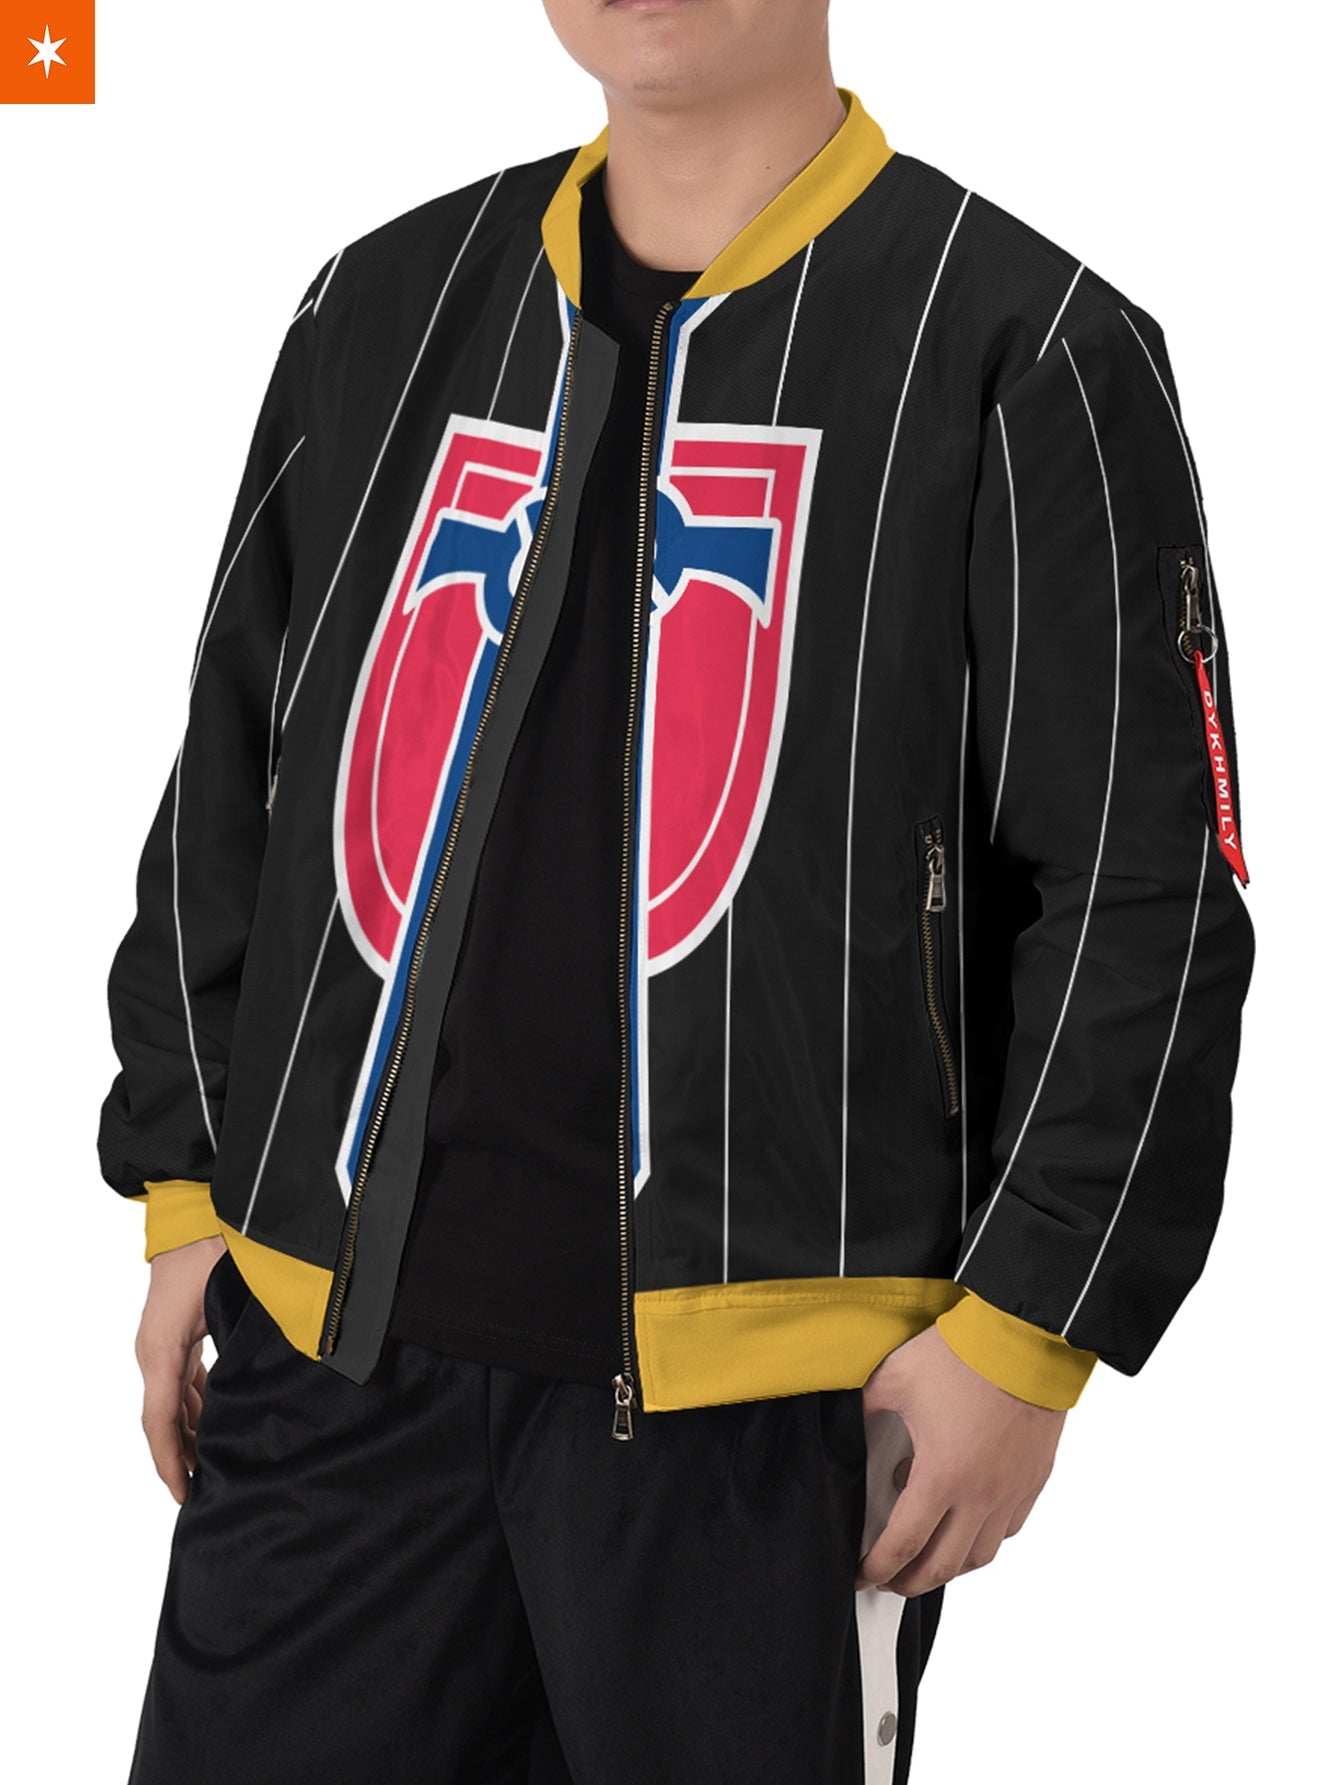 Fandomaniax - [Buy 1 Get 1 SALE] Poke Champion Uniform Bomber Jacket